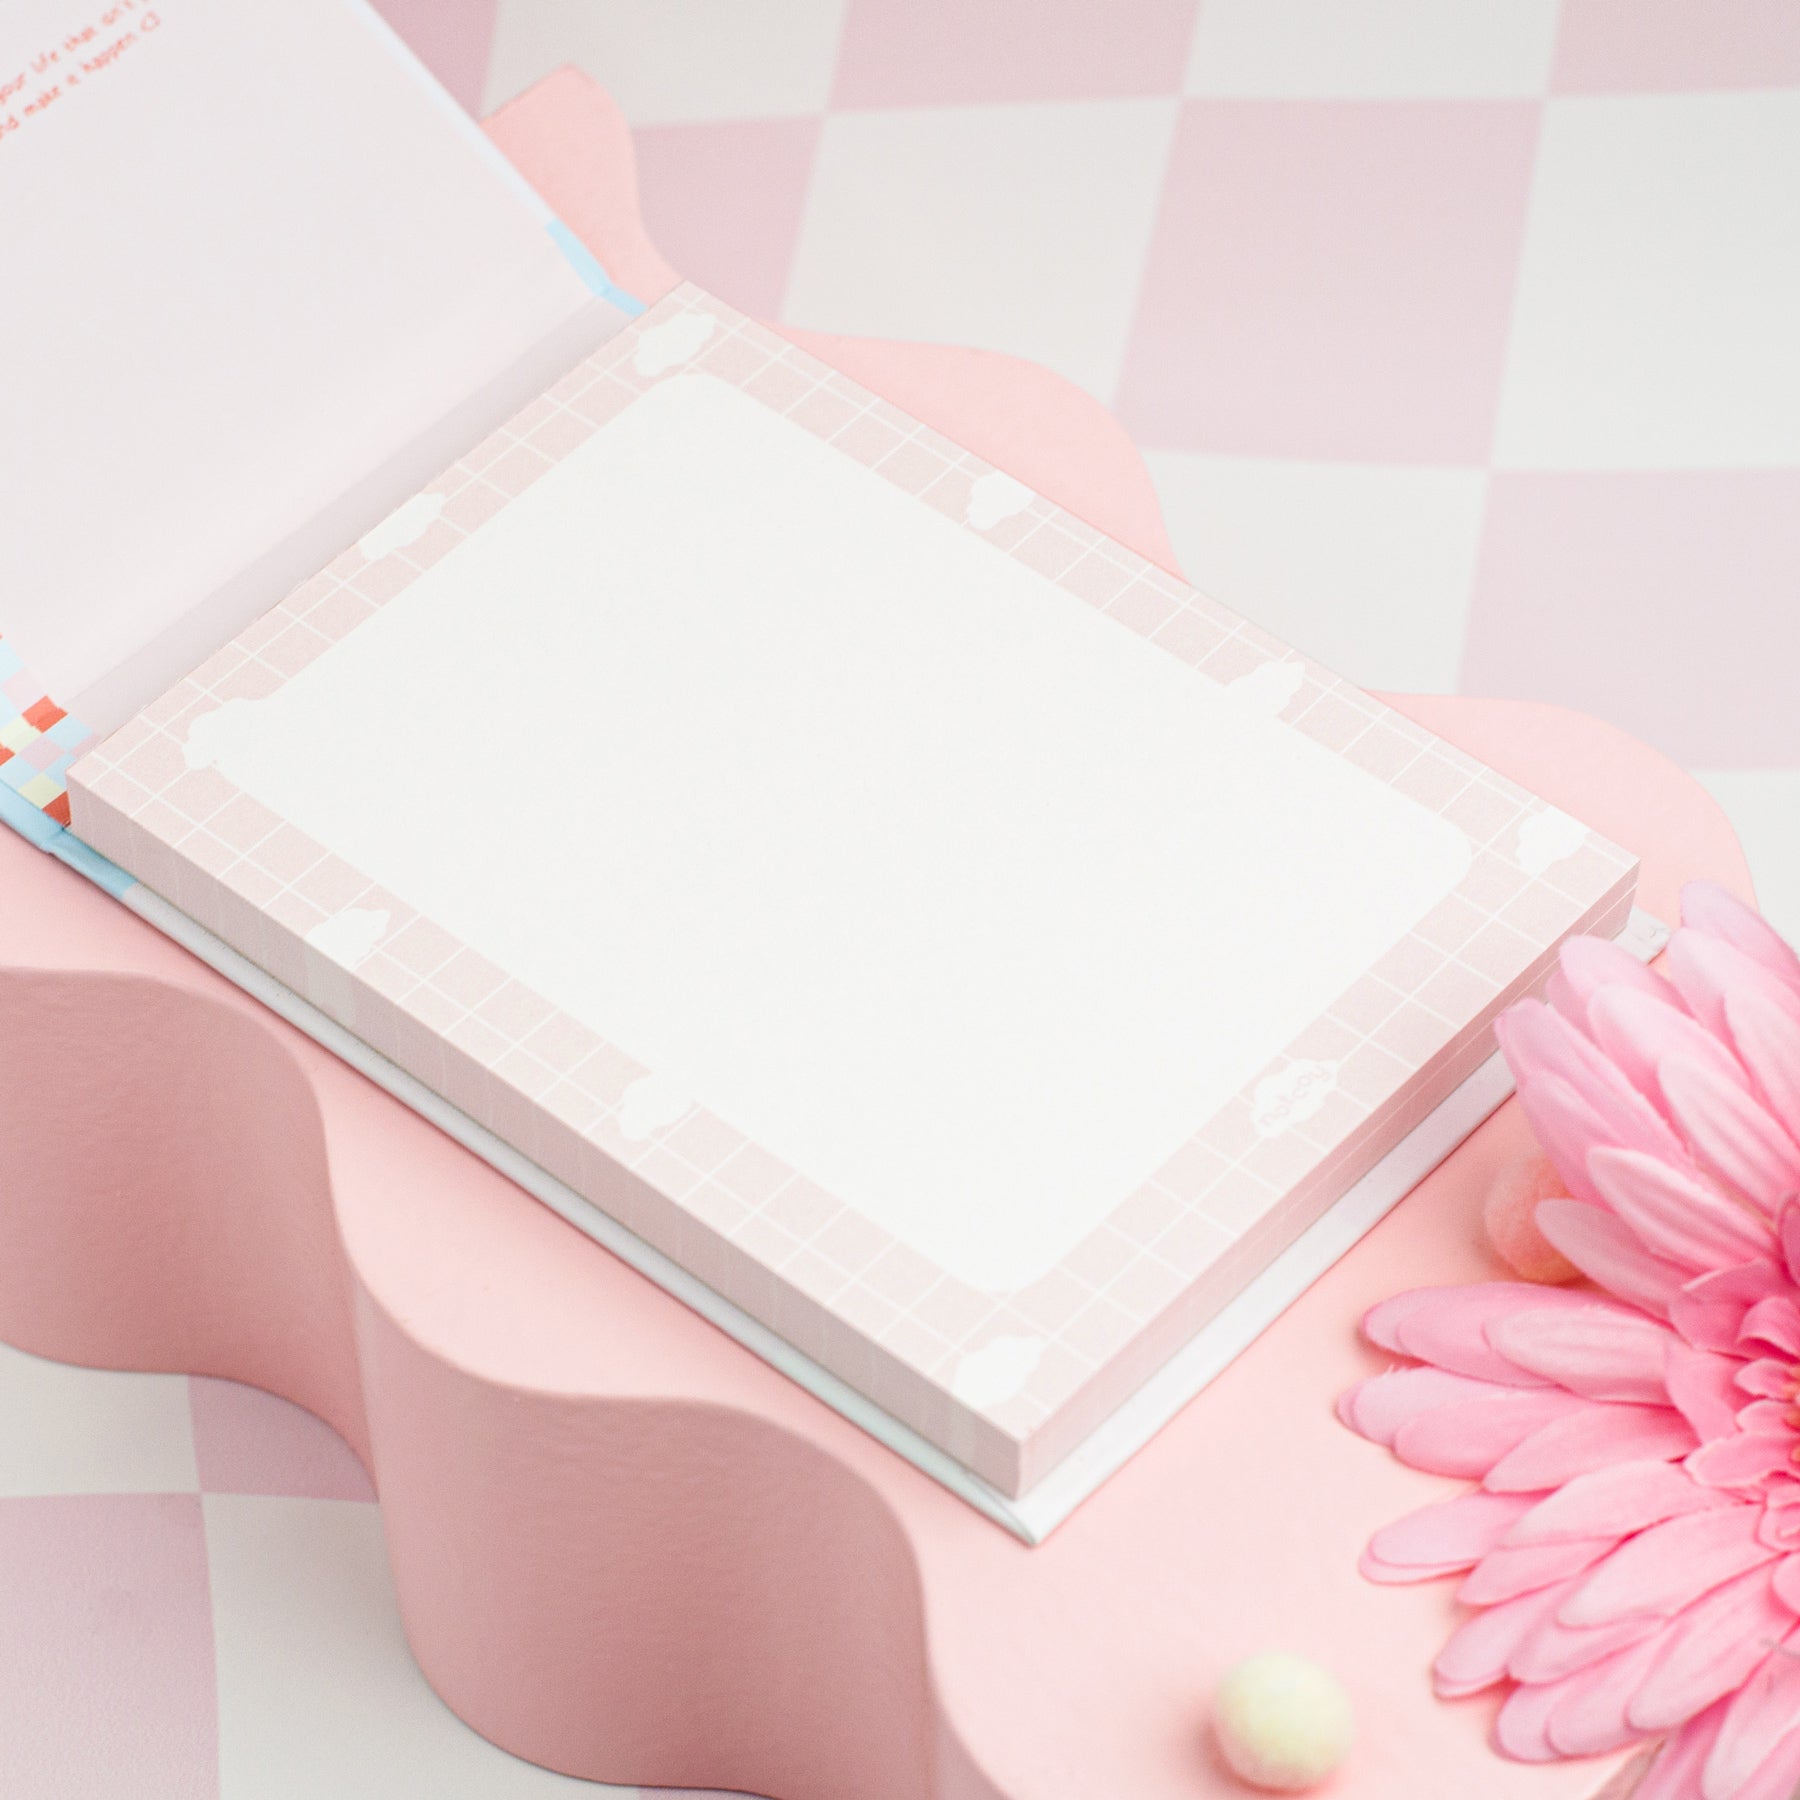 Notepad | I Bought It Cuz It's Pink - Notcoy